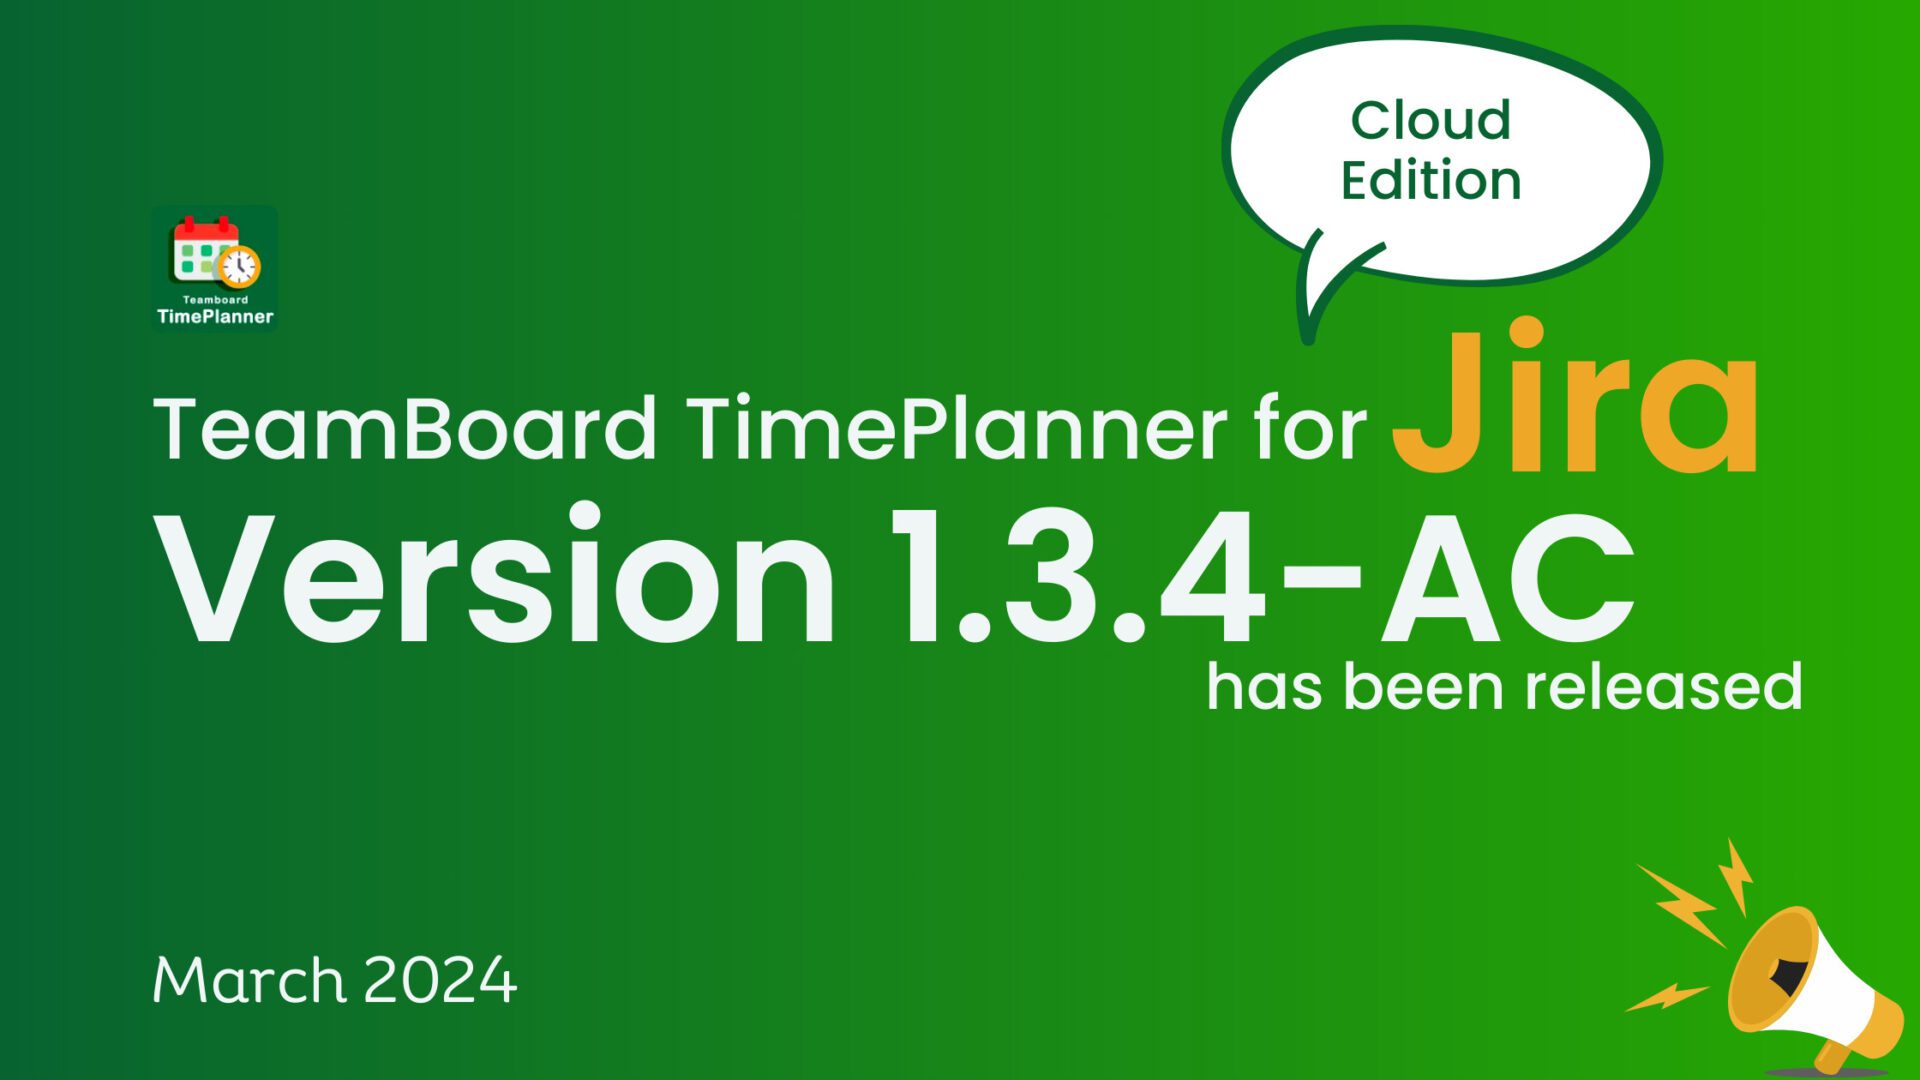 TimePlanner Release v1.3.4-AC